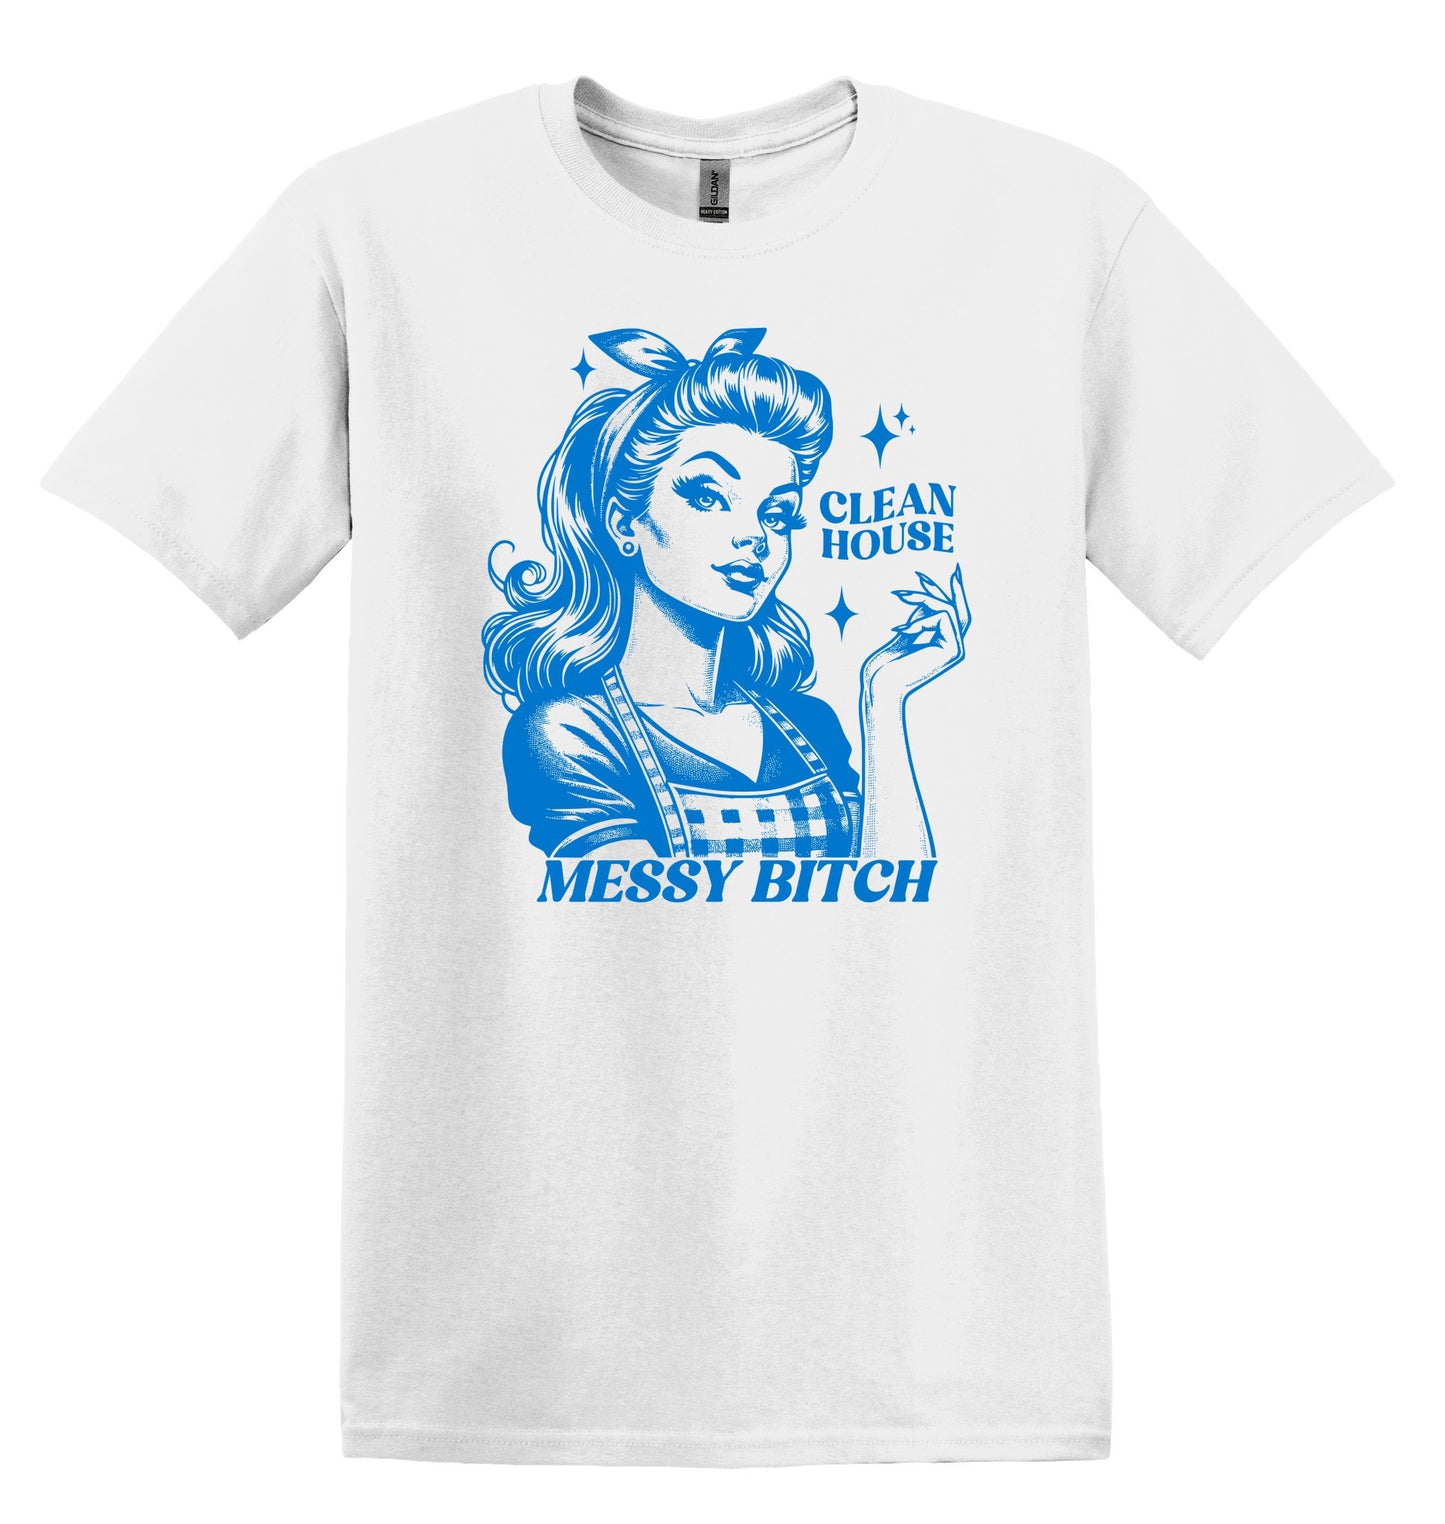 Clean House Messy Bitch Shirt Graphic Shirt Retro Adult Shirt Vintage Shirt Nostalgia Relaxed Cotton Tee Meme Shirt Trendy Shirt Funny Gift